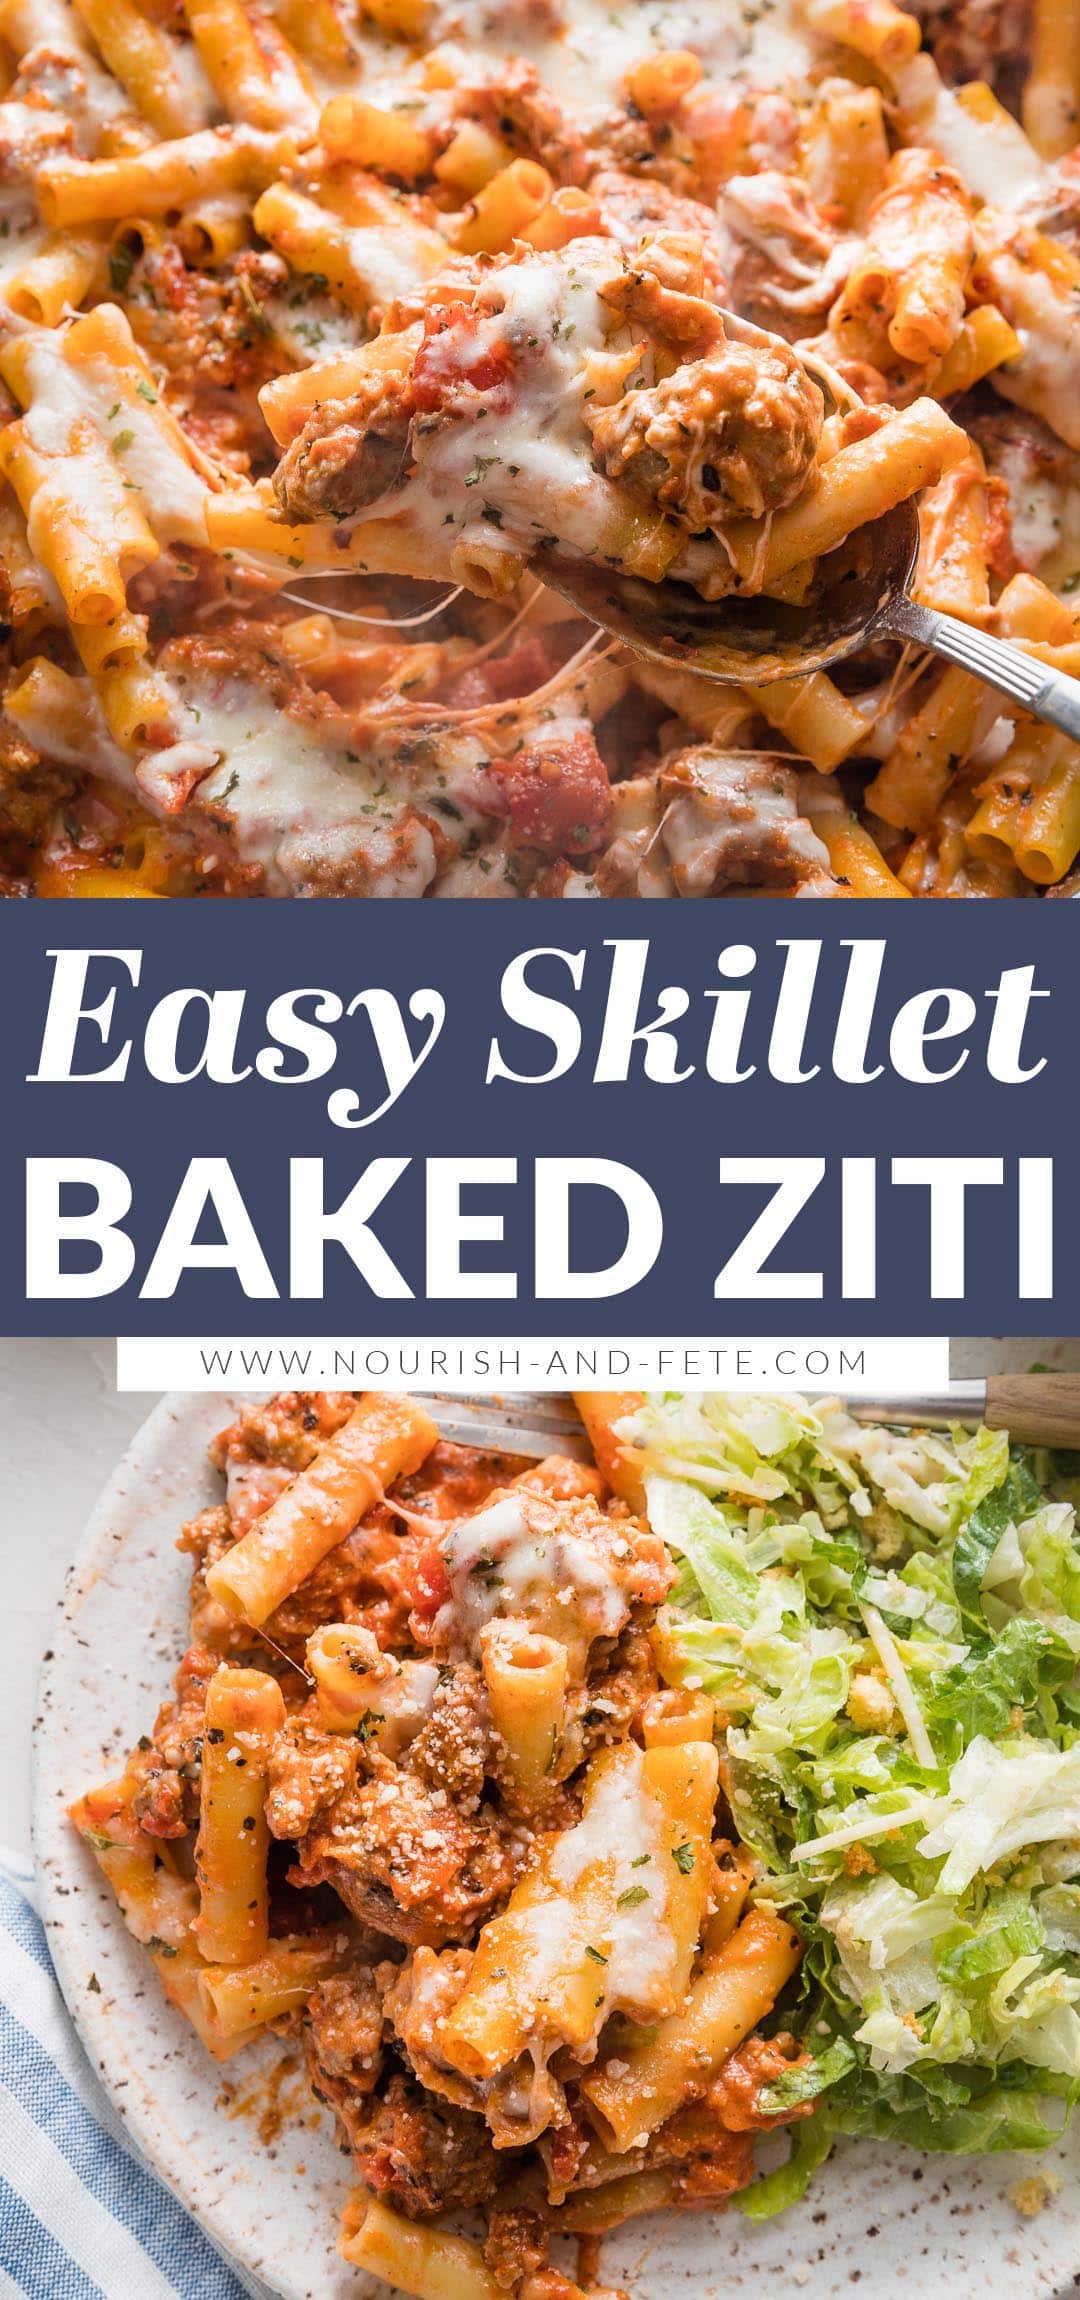 Skillet Baked Ziti - Nourish and Fete